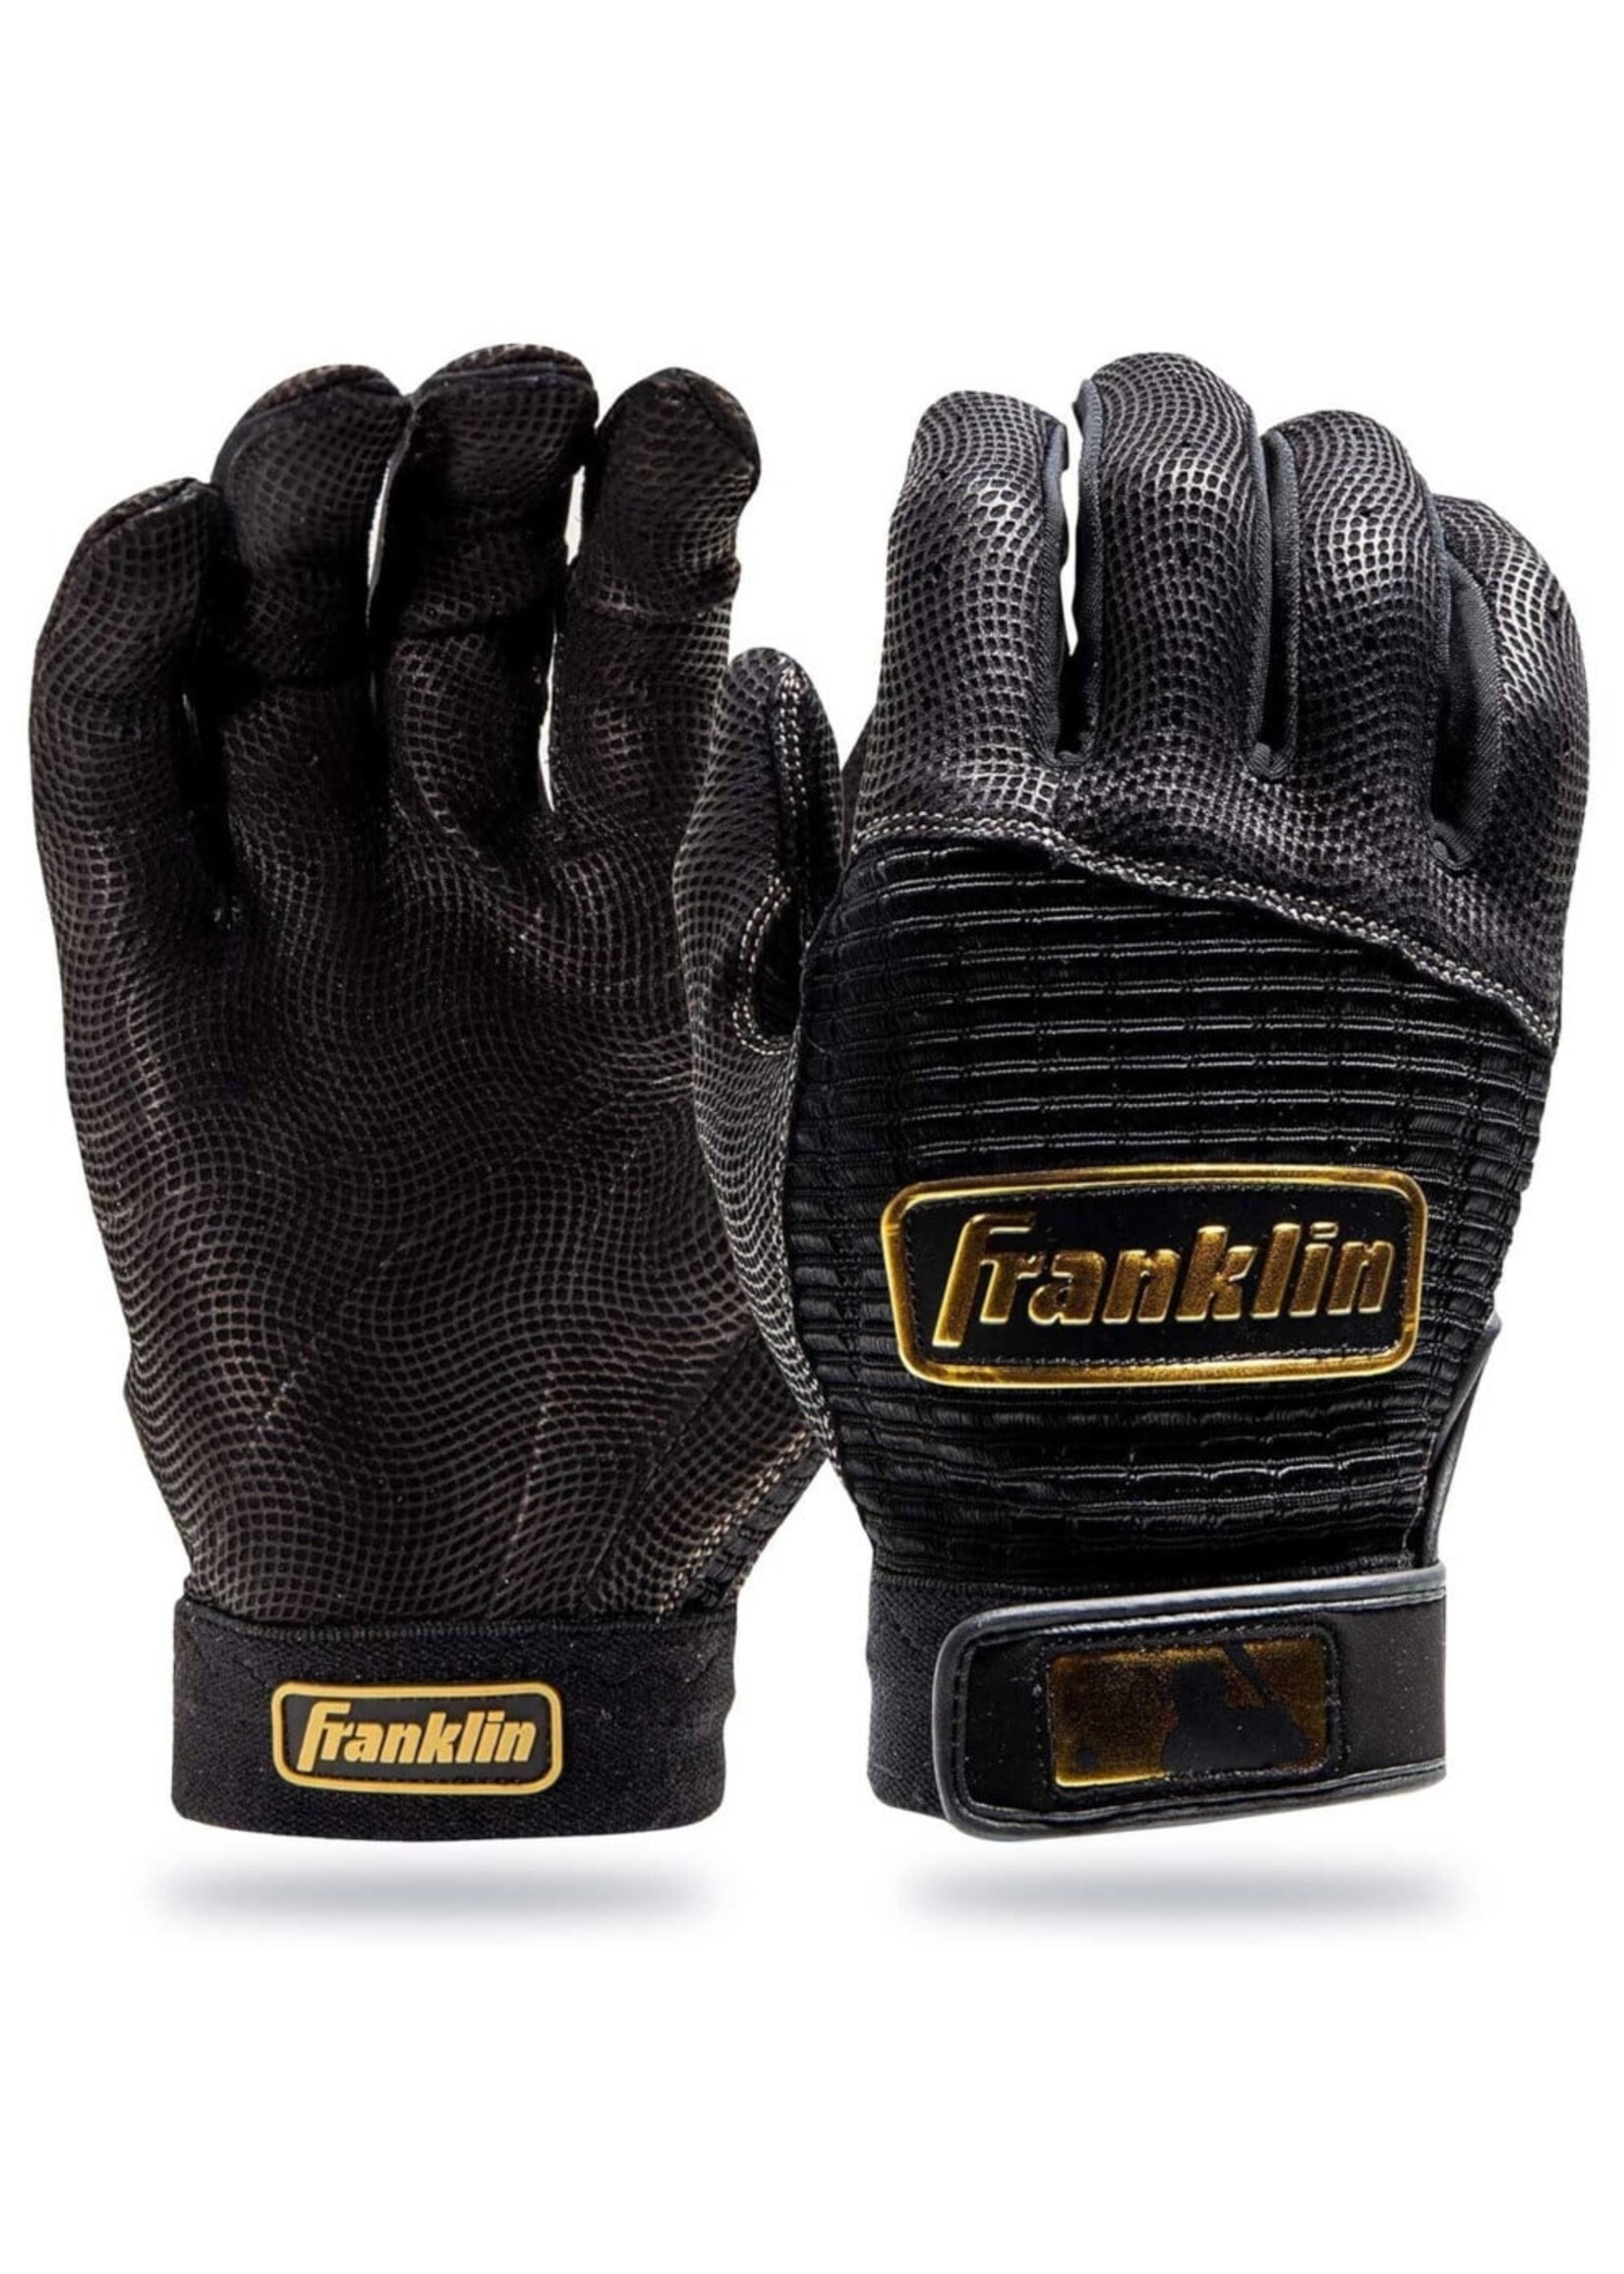 FRANKLIN MLB Pro Classic Batting Gloves - Black/Gold